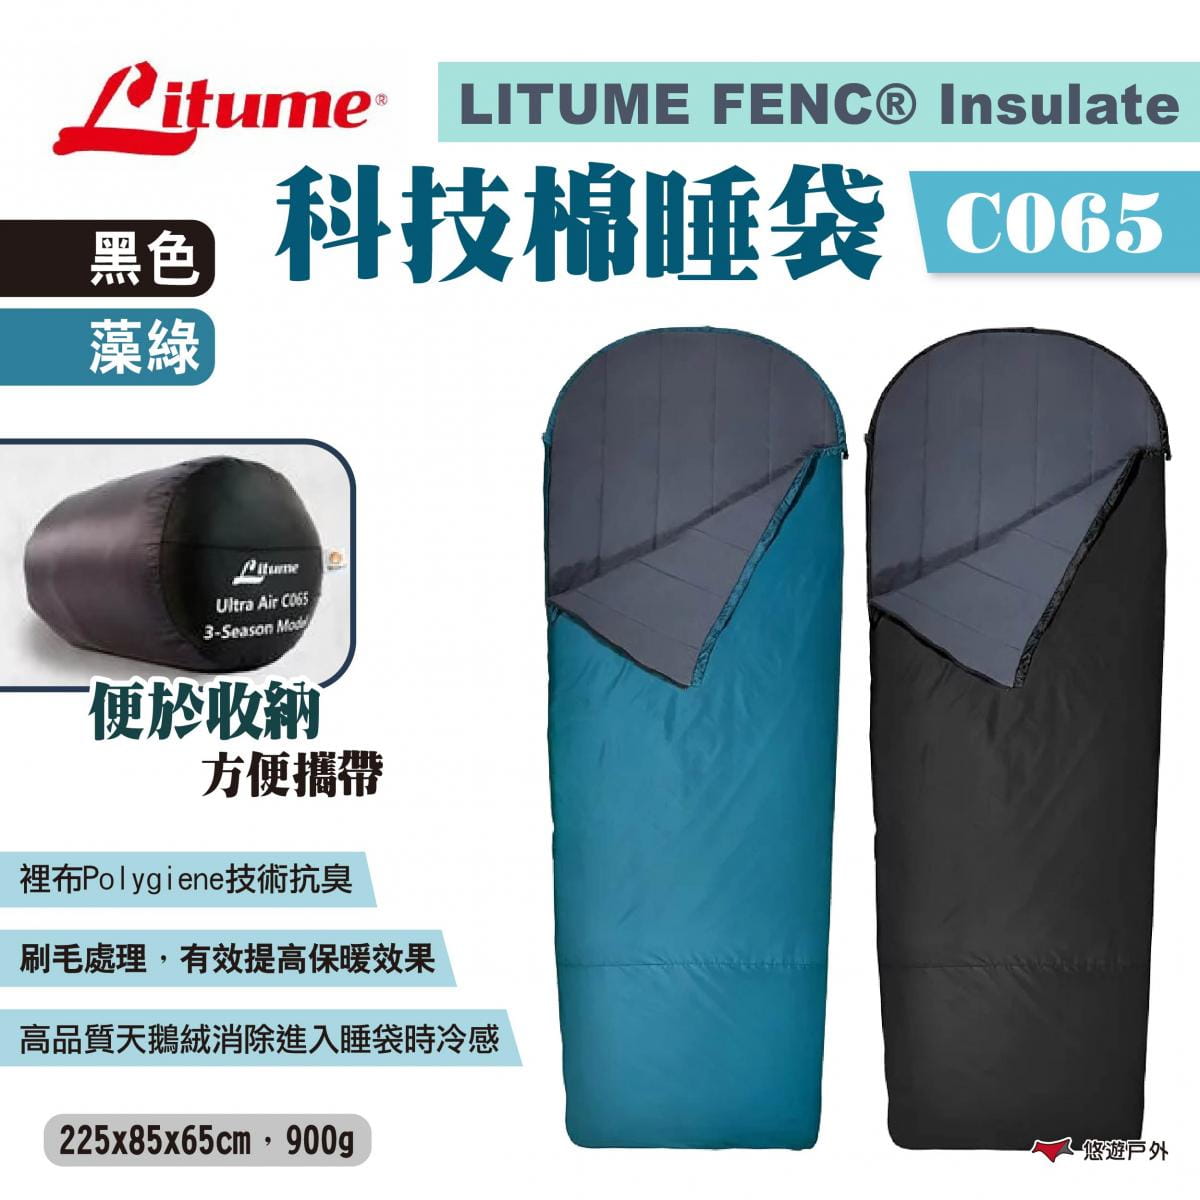 【LITUME】意都美 FENC® Insulate科技棉睡袋 C065 悠遊戶外 1